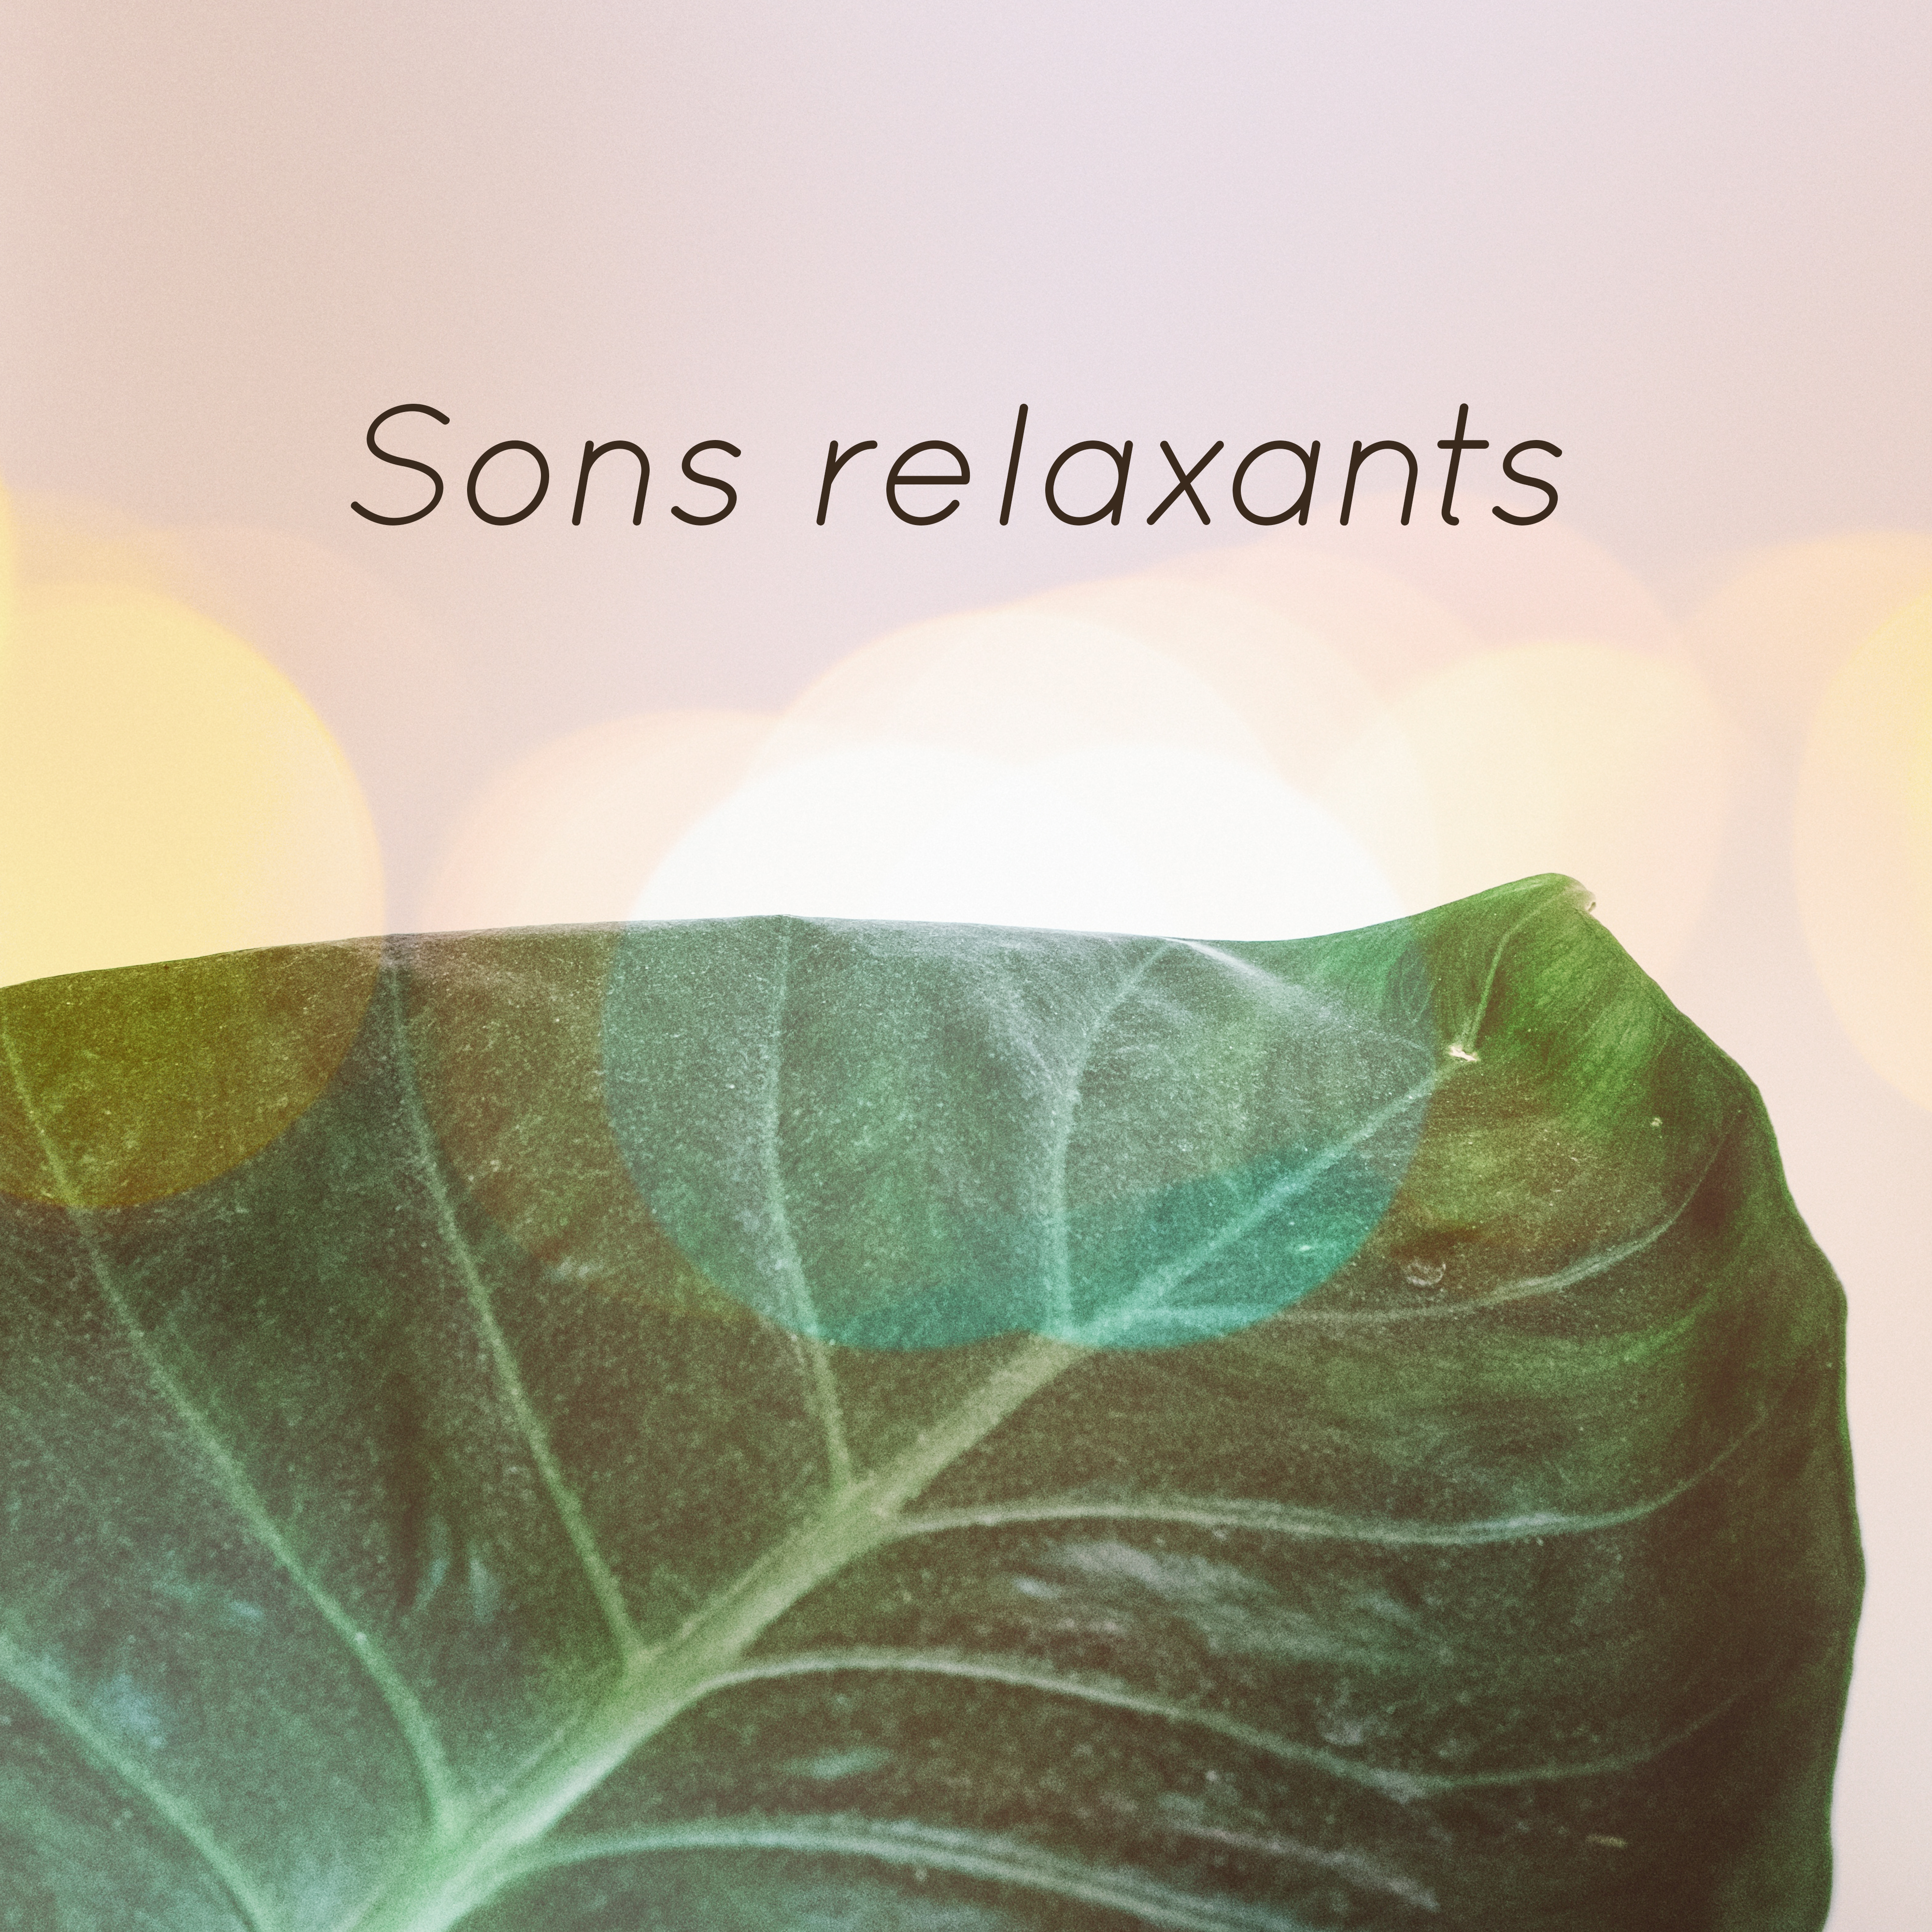 Sons relaxants